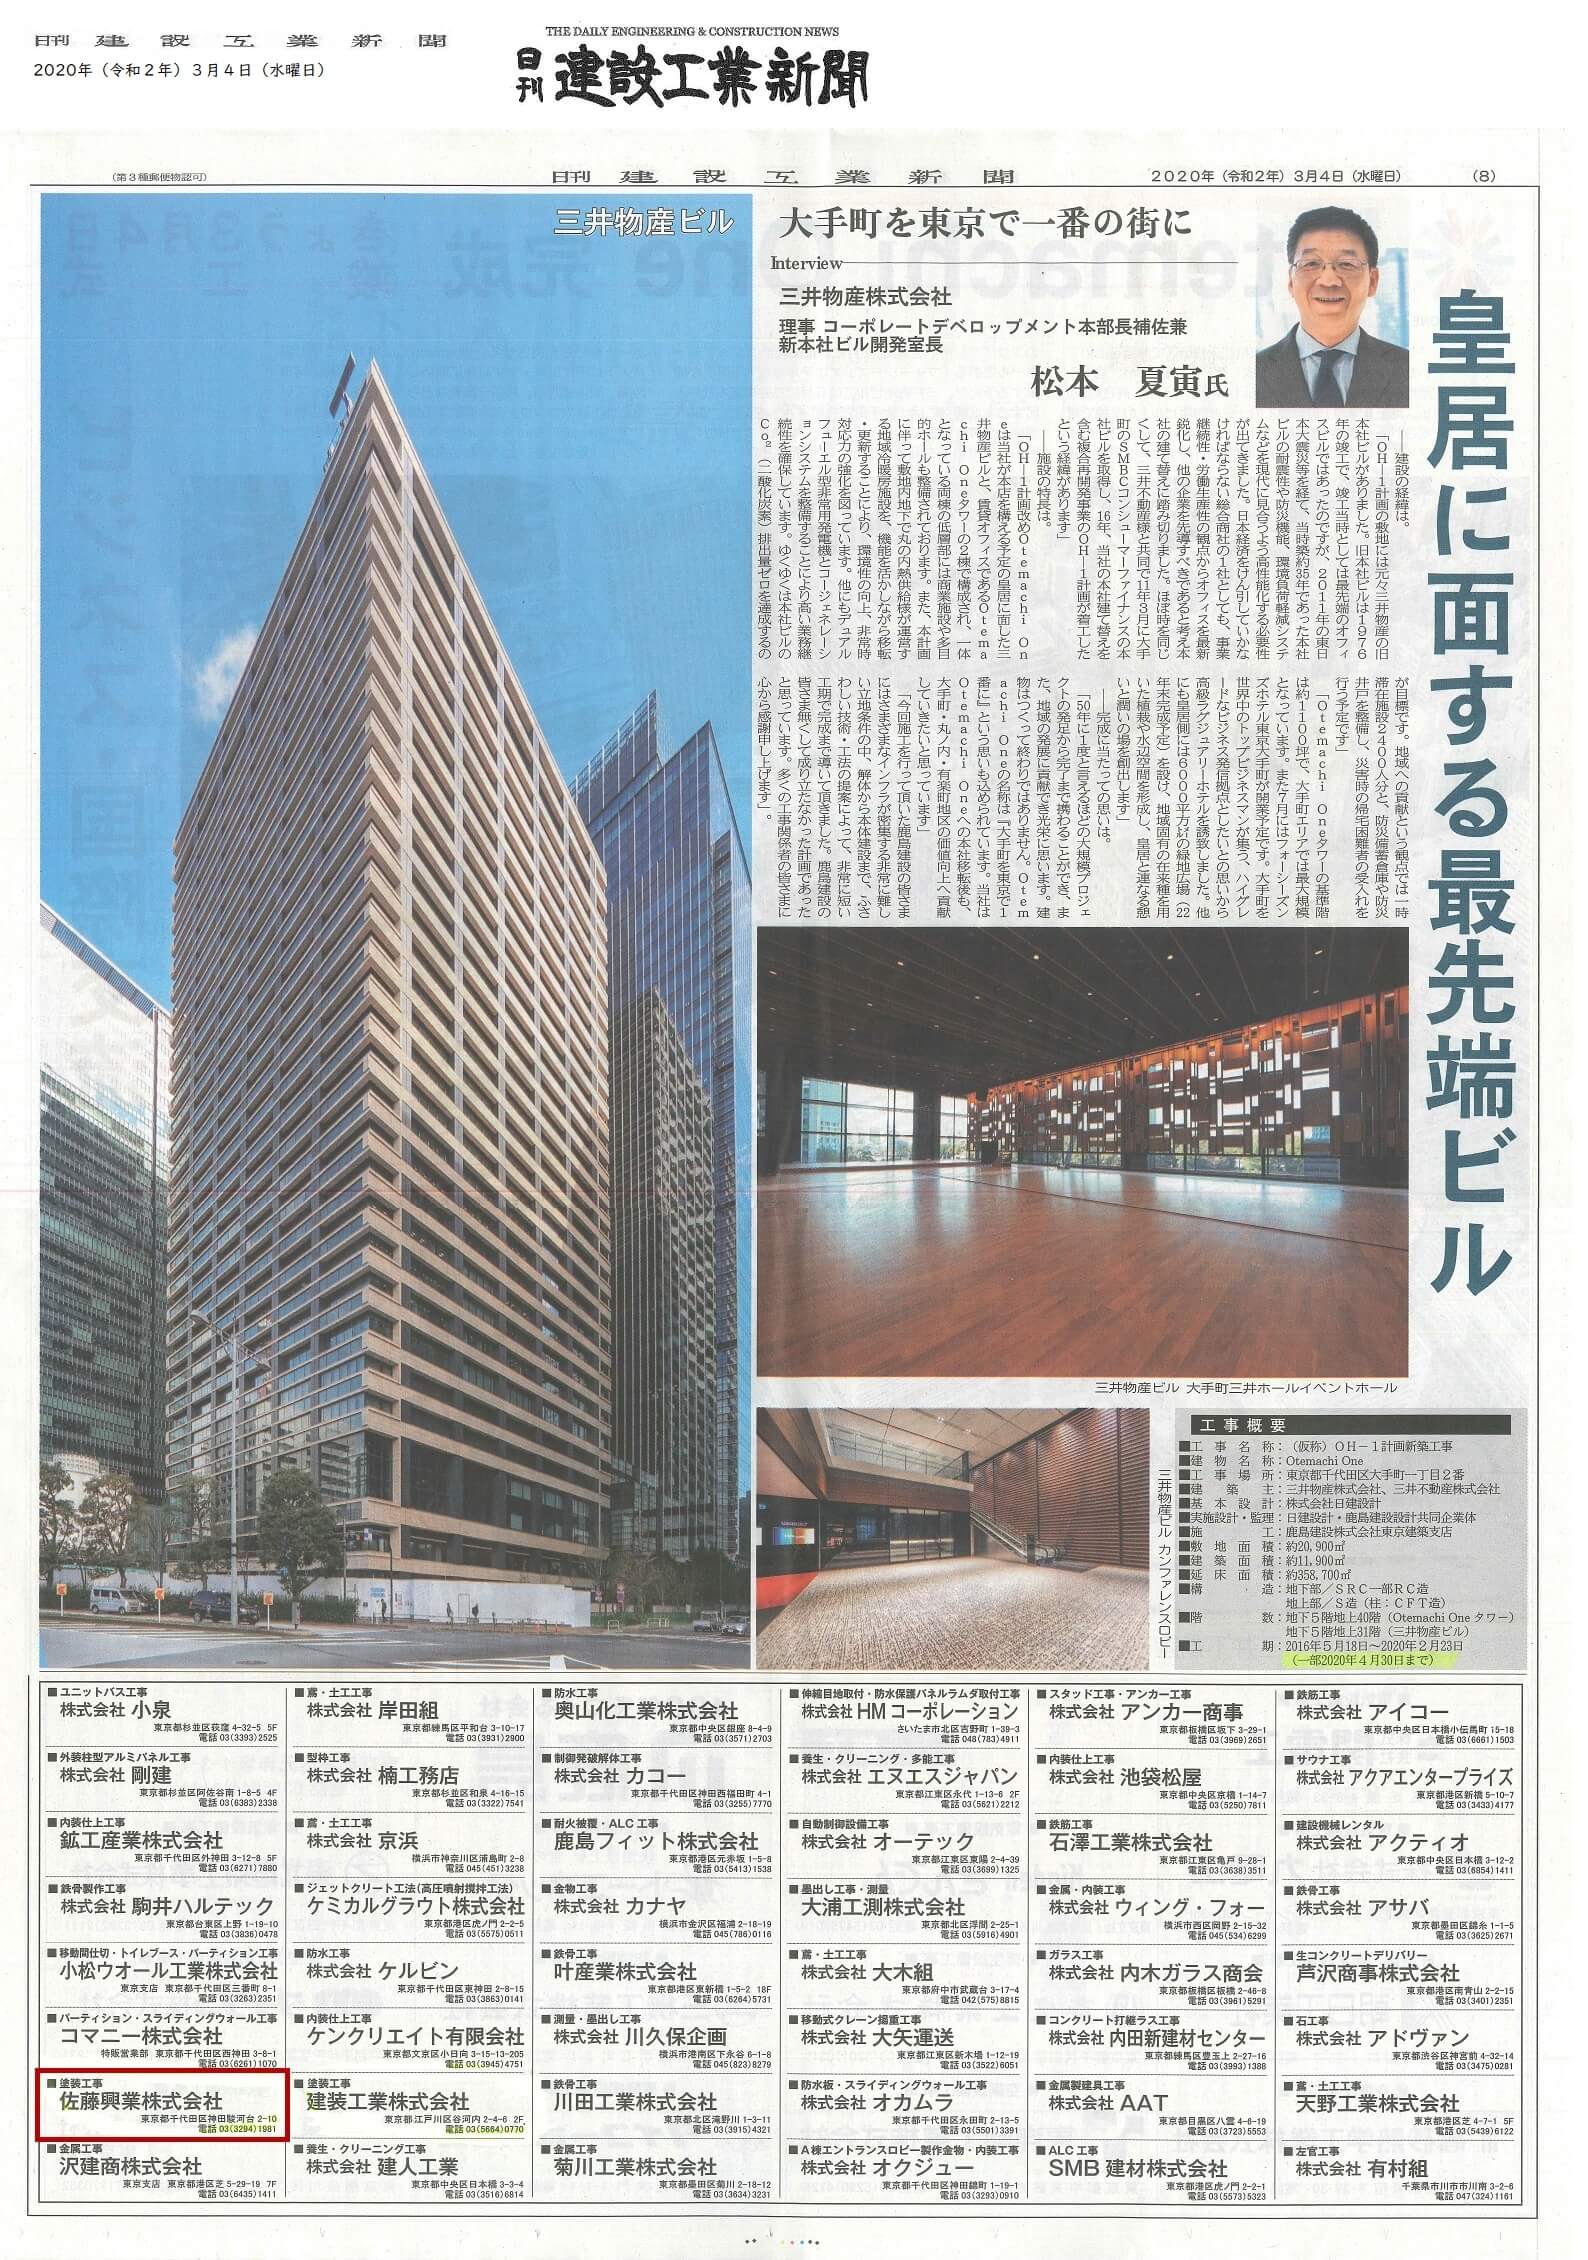 Otemachi One タワーの竣工広告が 『日刊建設工業新聞』に掲載